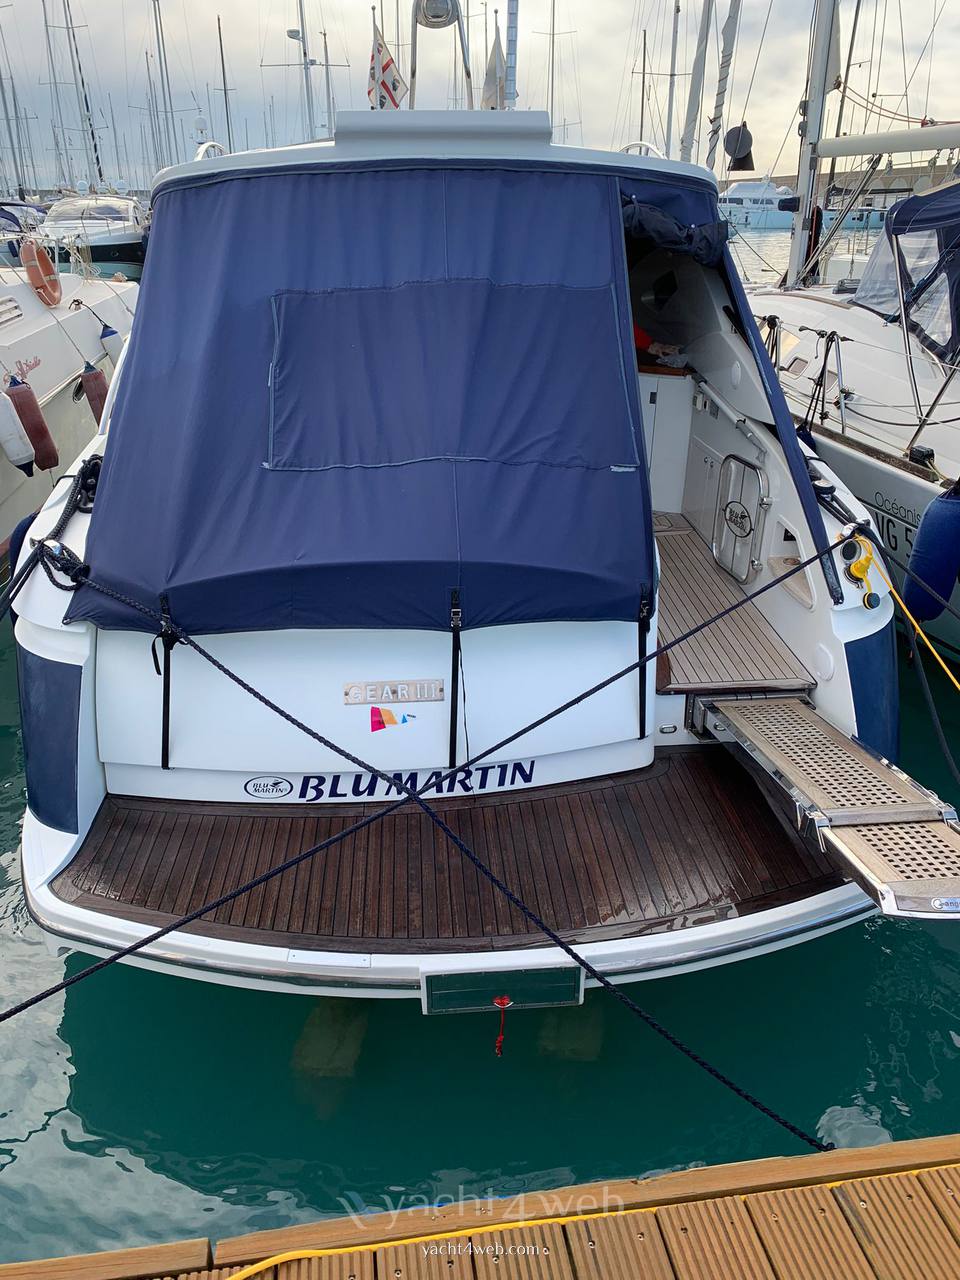 BLU MARTIN 13,50 sun top ht Моторная лодка используется для продажи